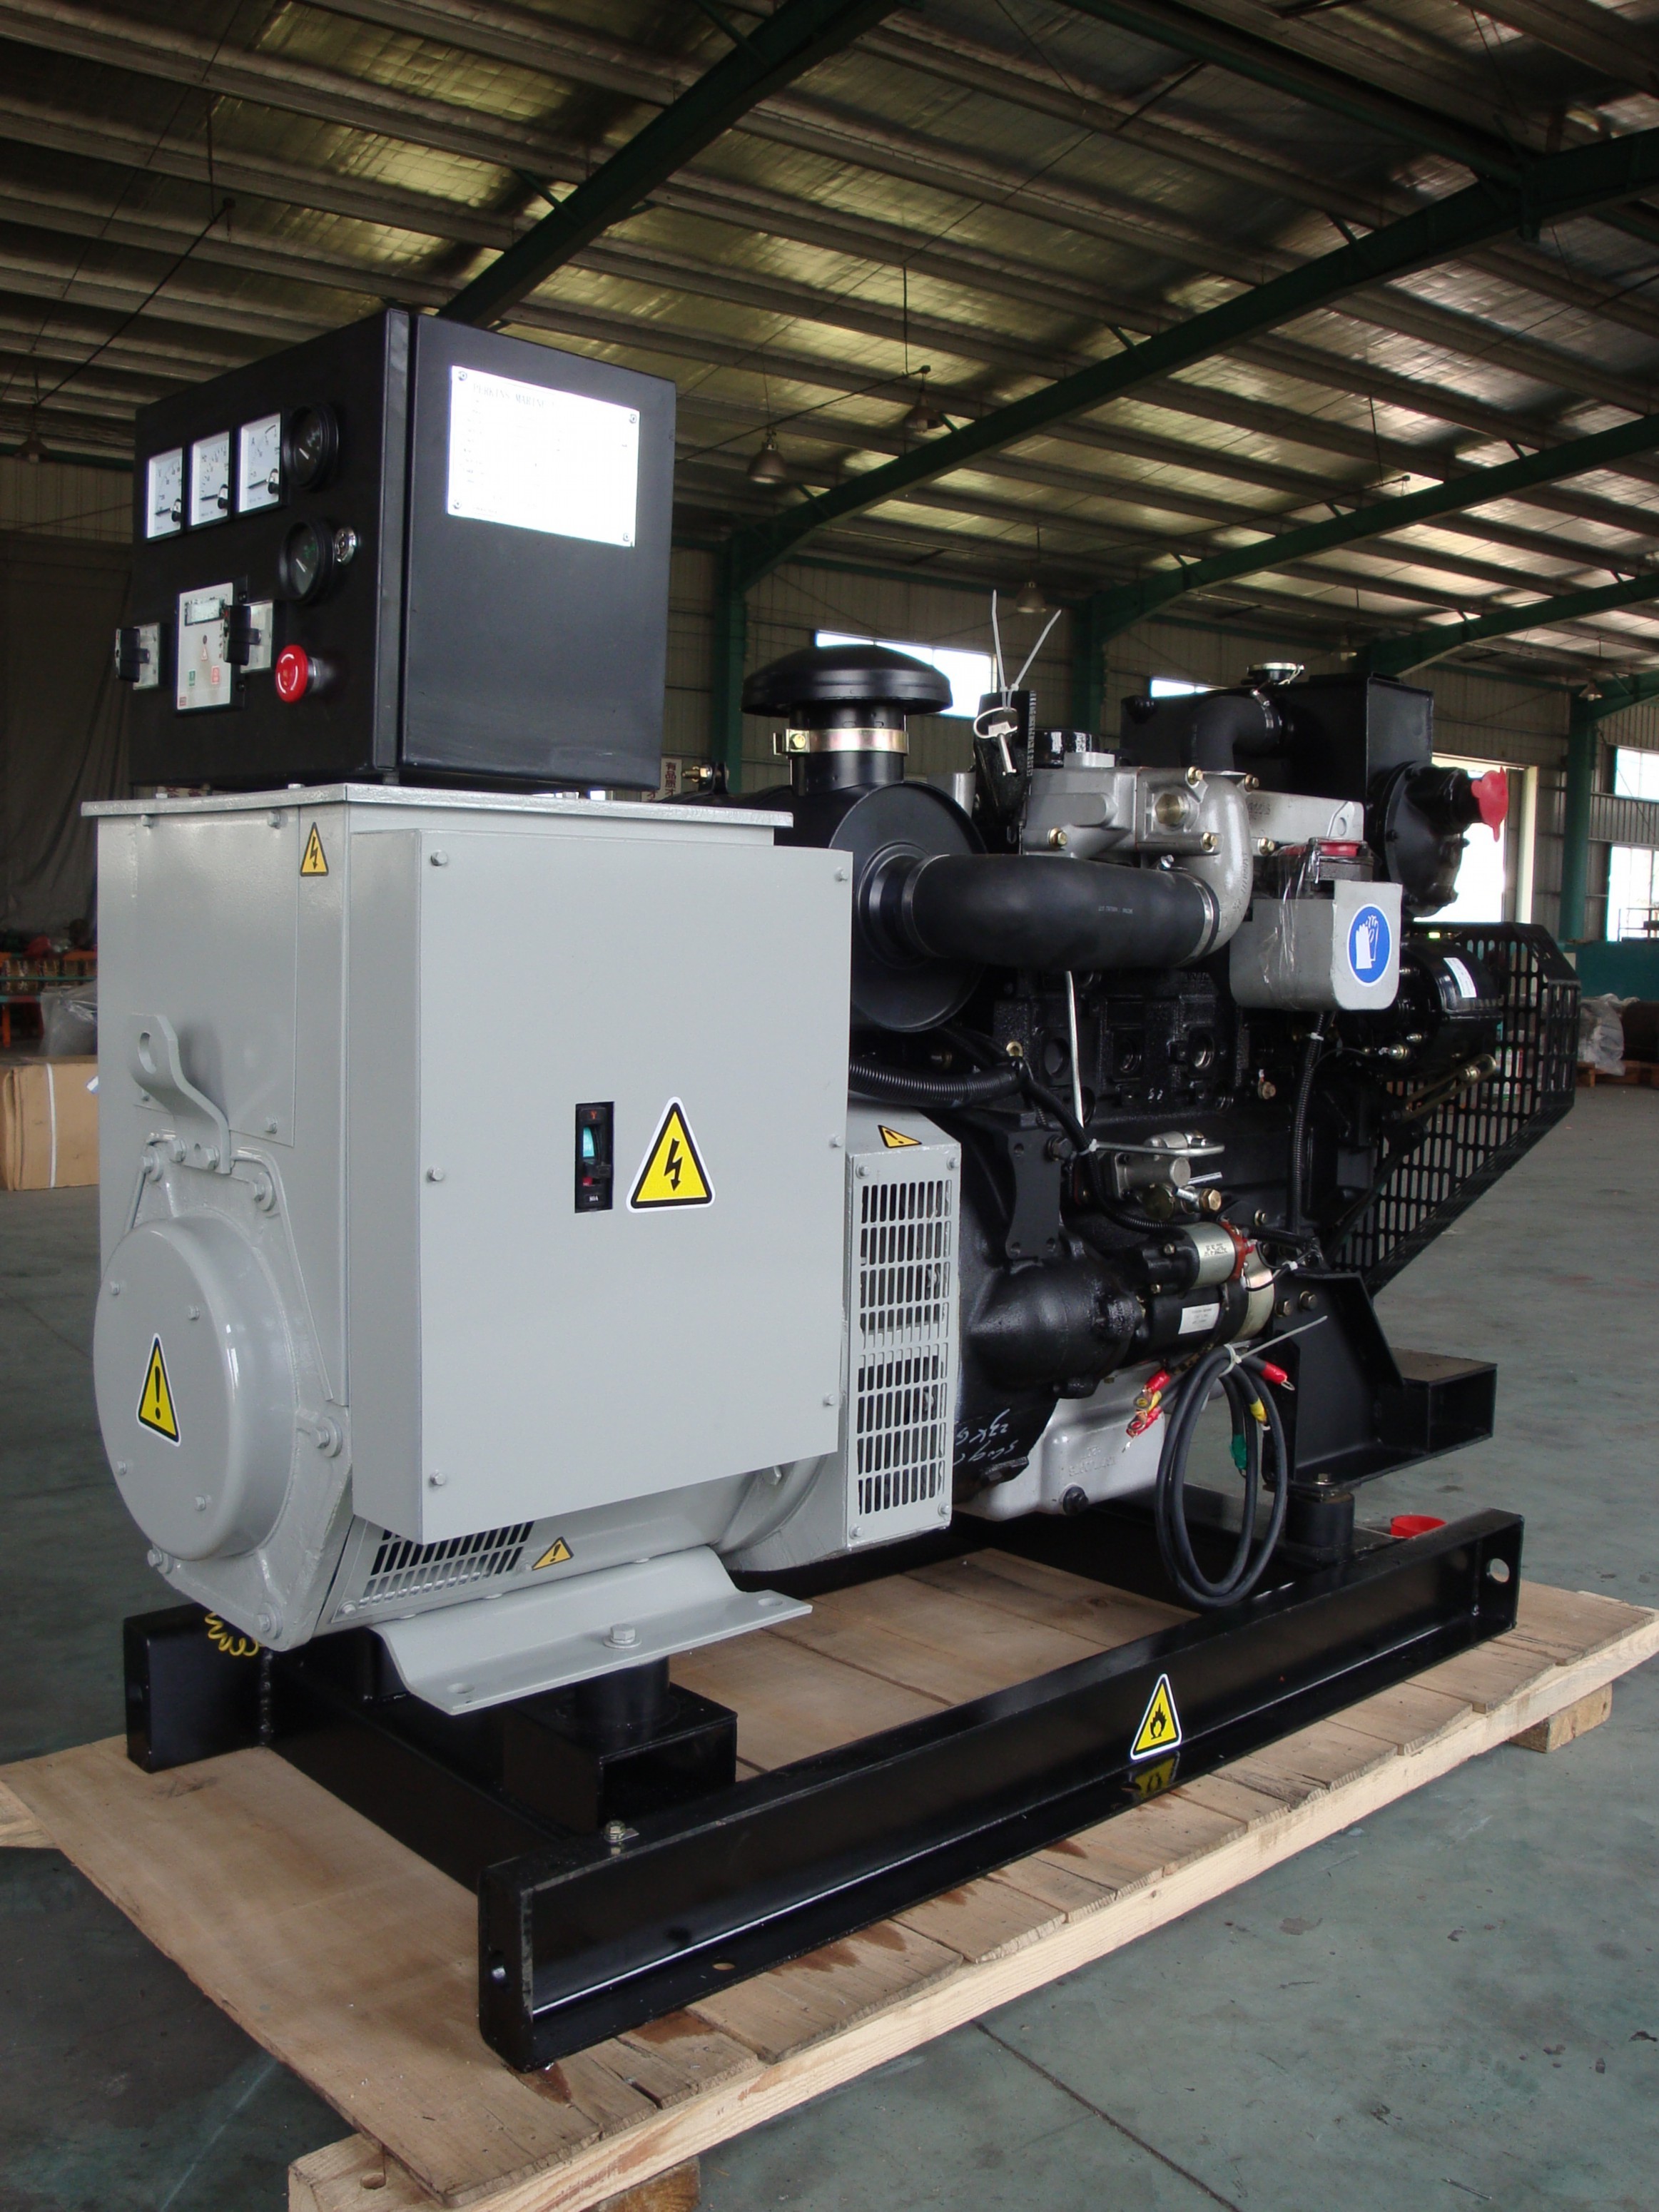  Marine Generator Set with Lovol Brand Diesel Engine and APT Power Brand Alternator, Output Manufactures